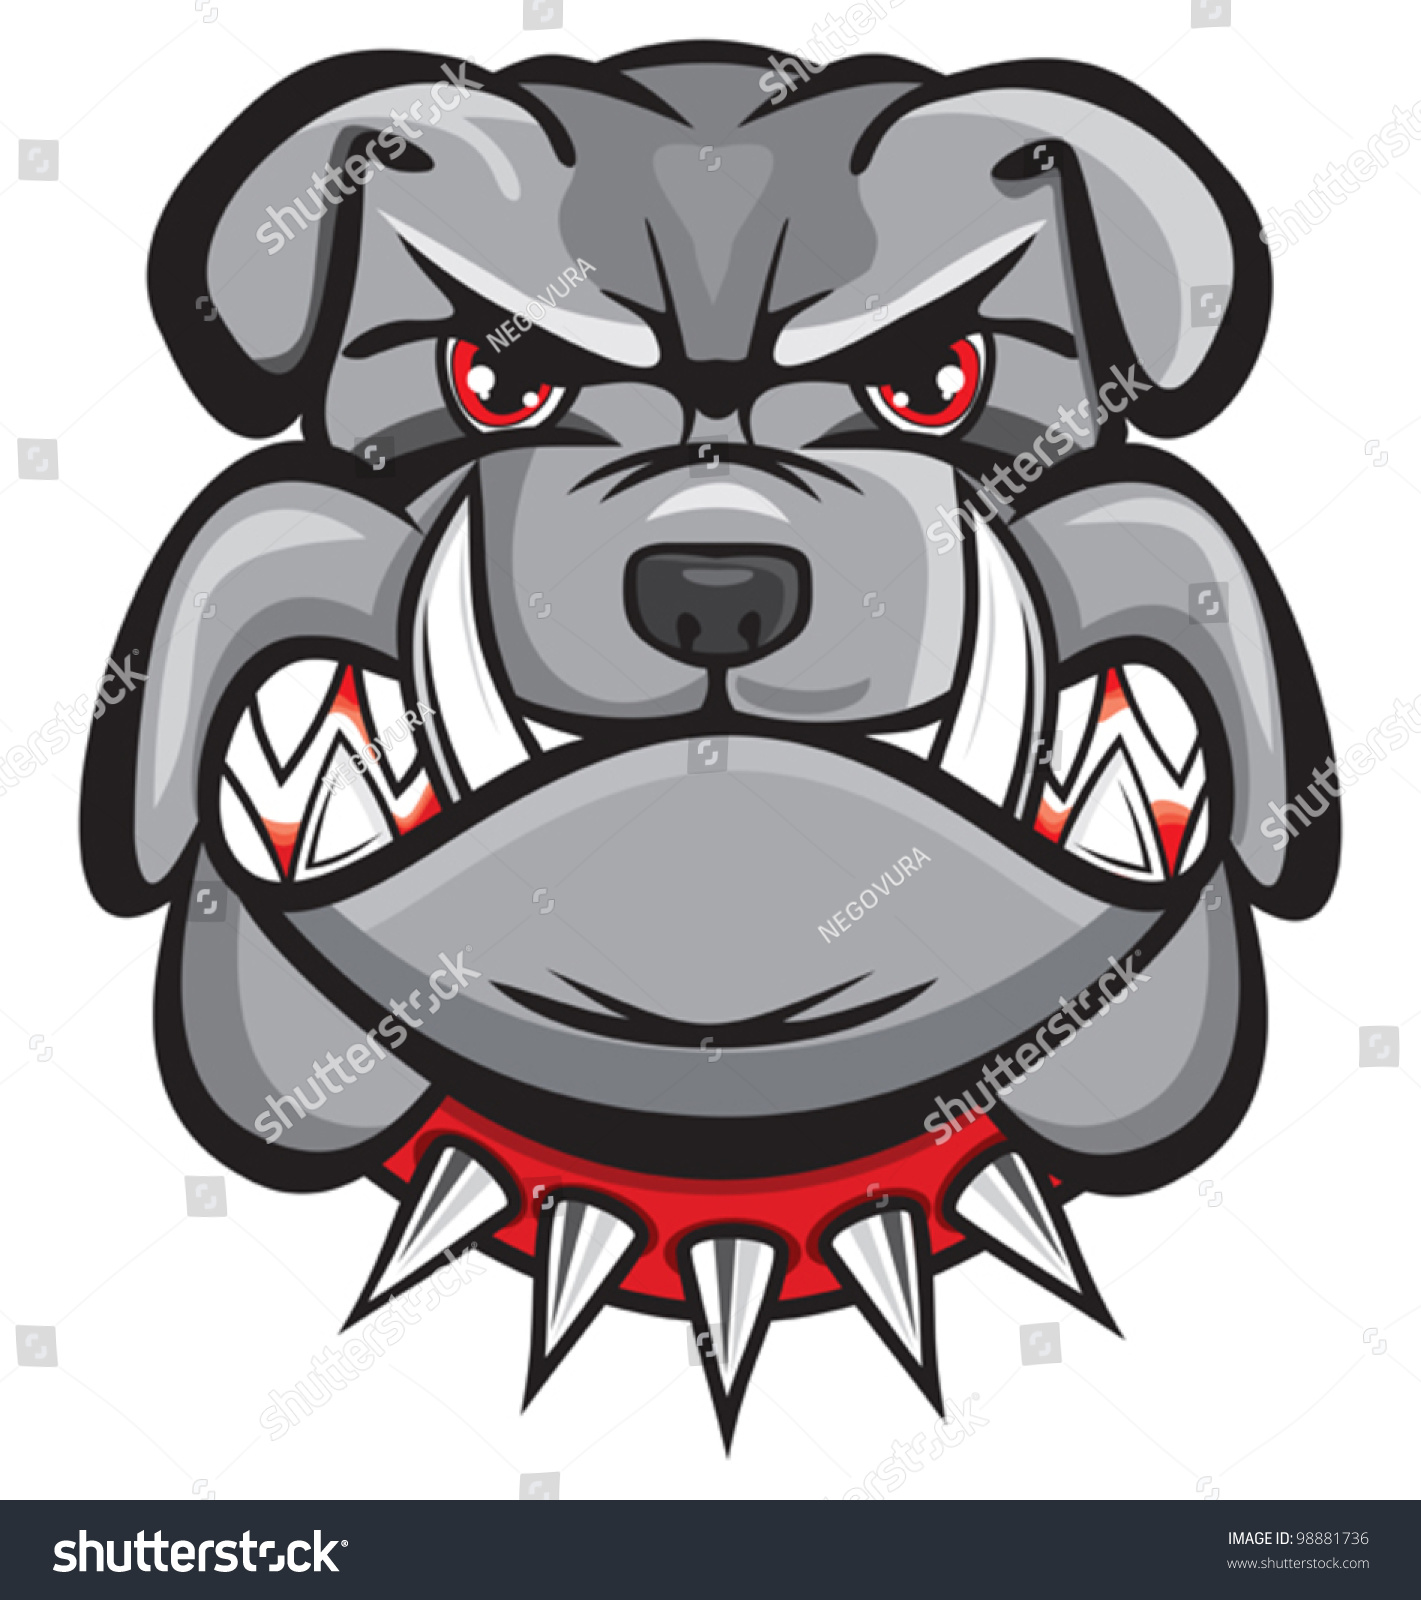 46++ Gambar logo anjing bulldog download